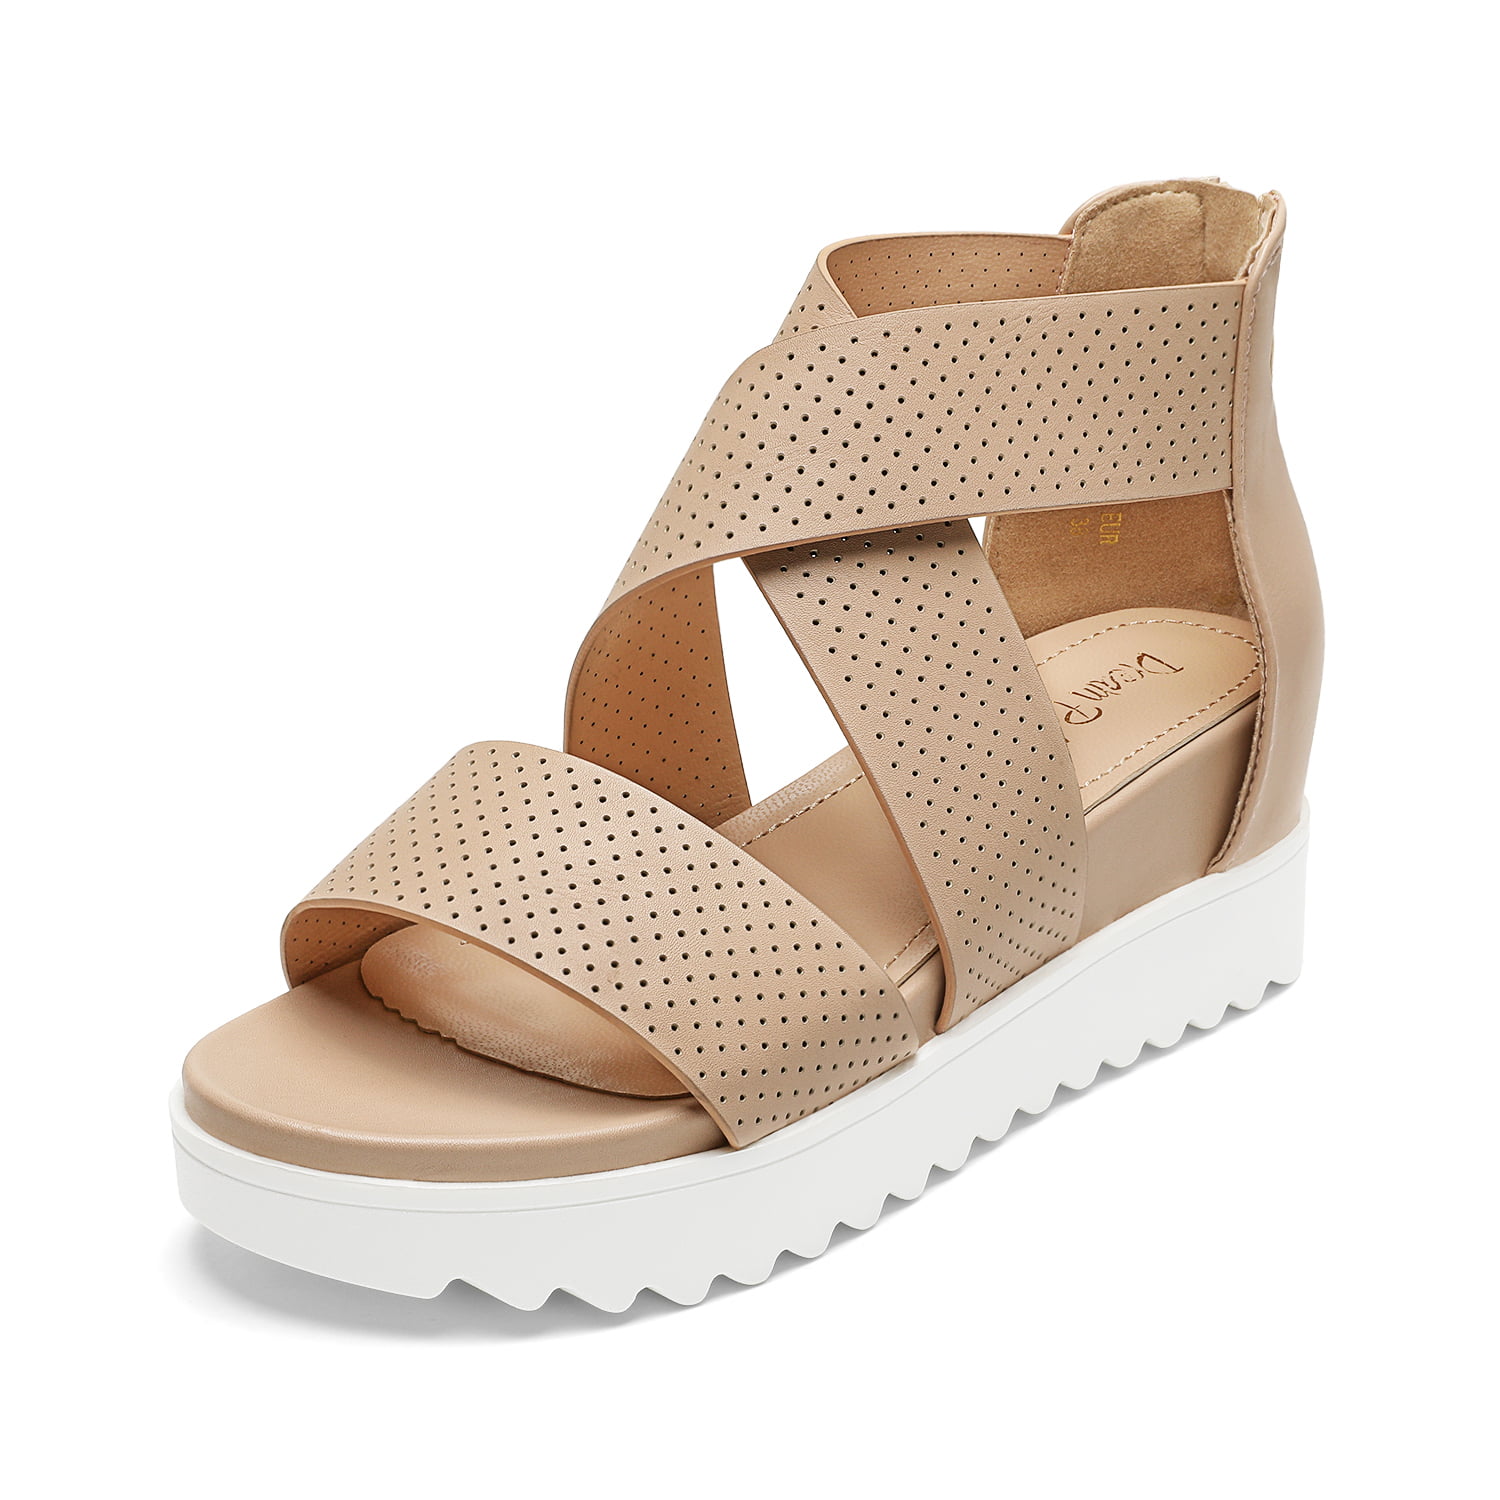 Details about   Fashion star sequin sandals women's plateau-sole summer wedge shoes buckle